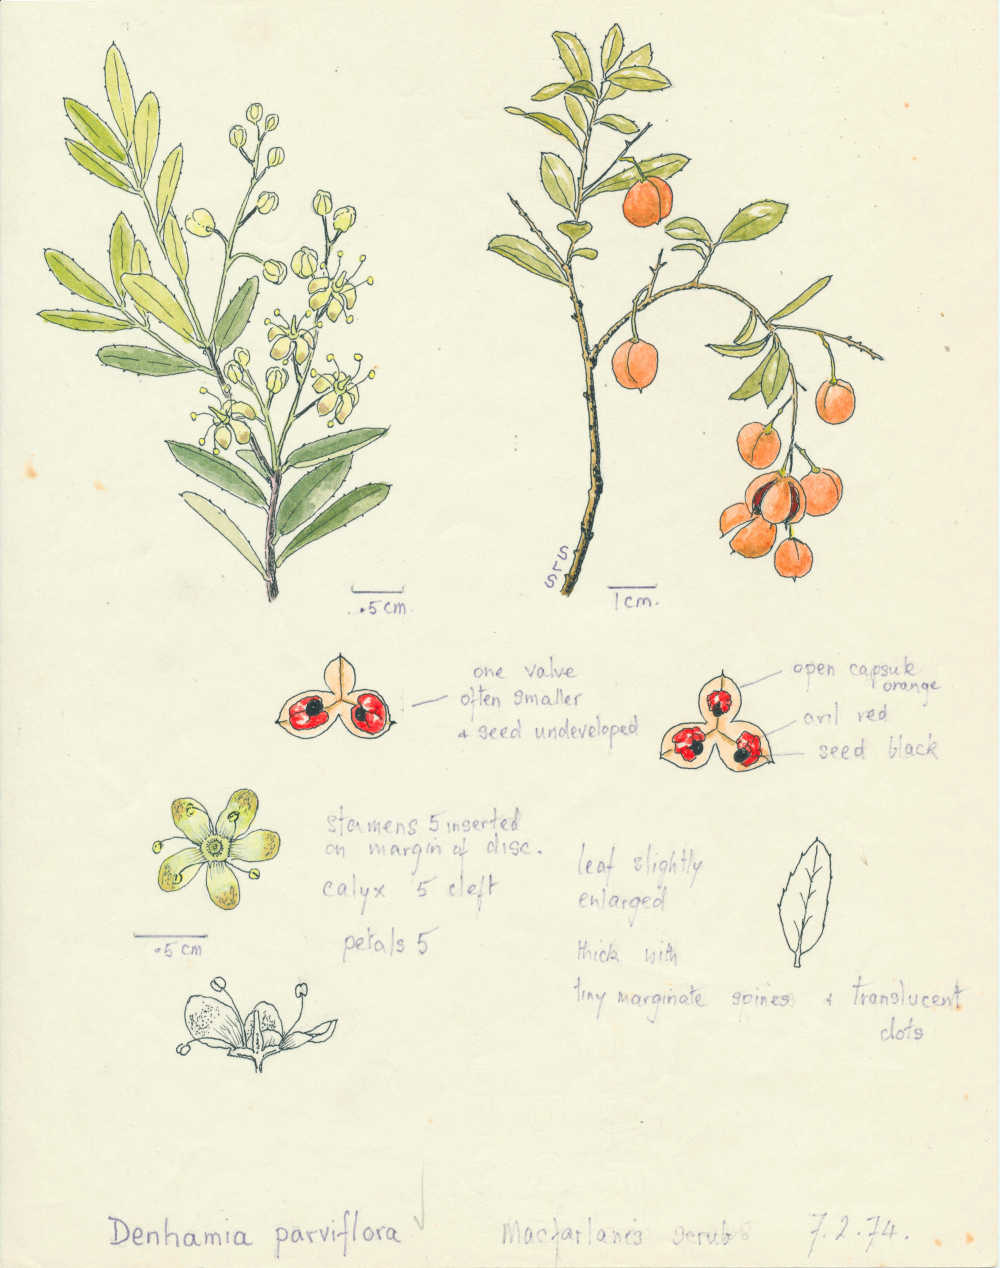 Denhamia parvifolia | depiction by Sylvia Seiler, Killara, West Boondooma, Qld | Queensland Native Seeds